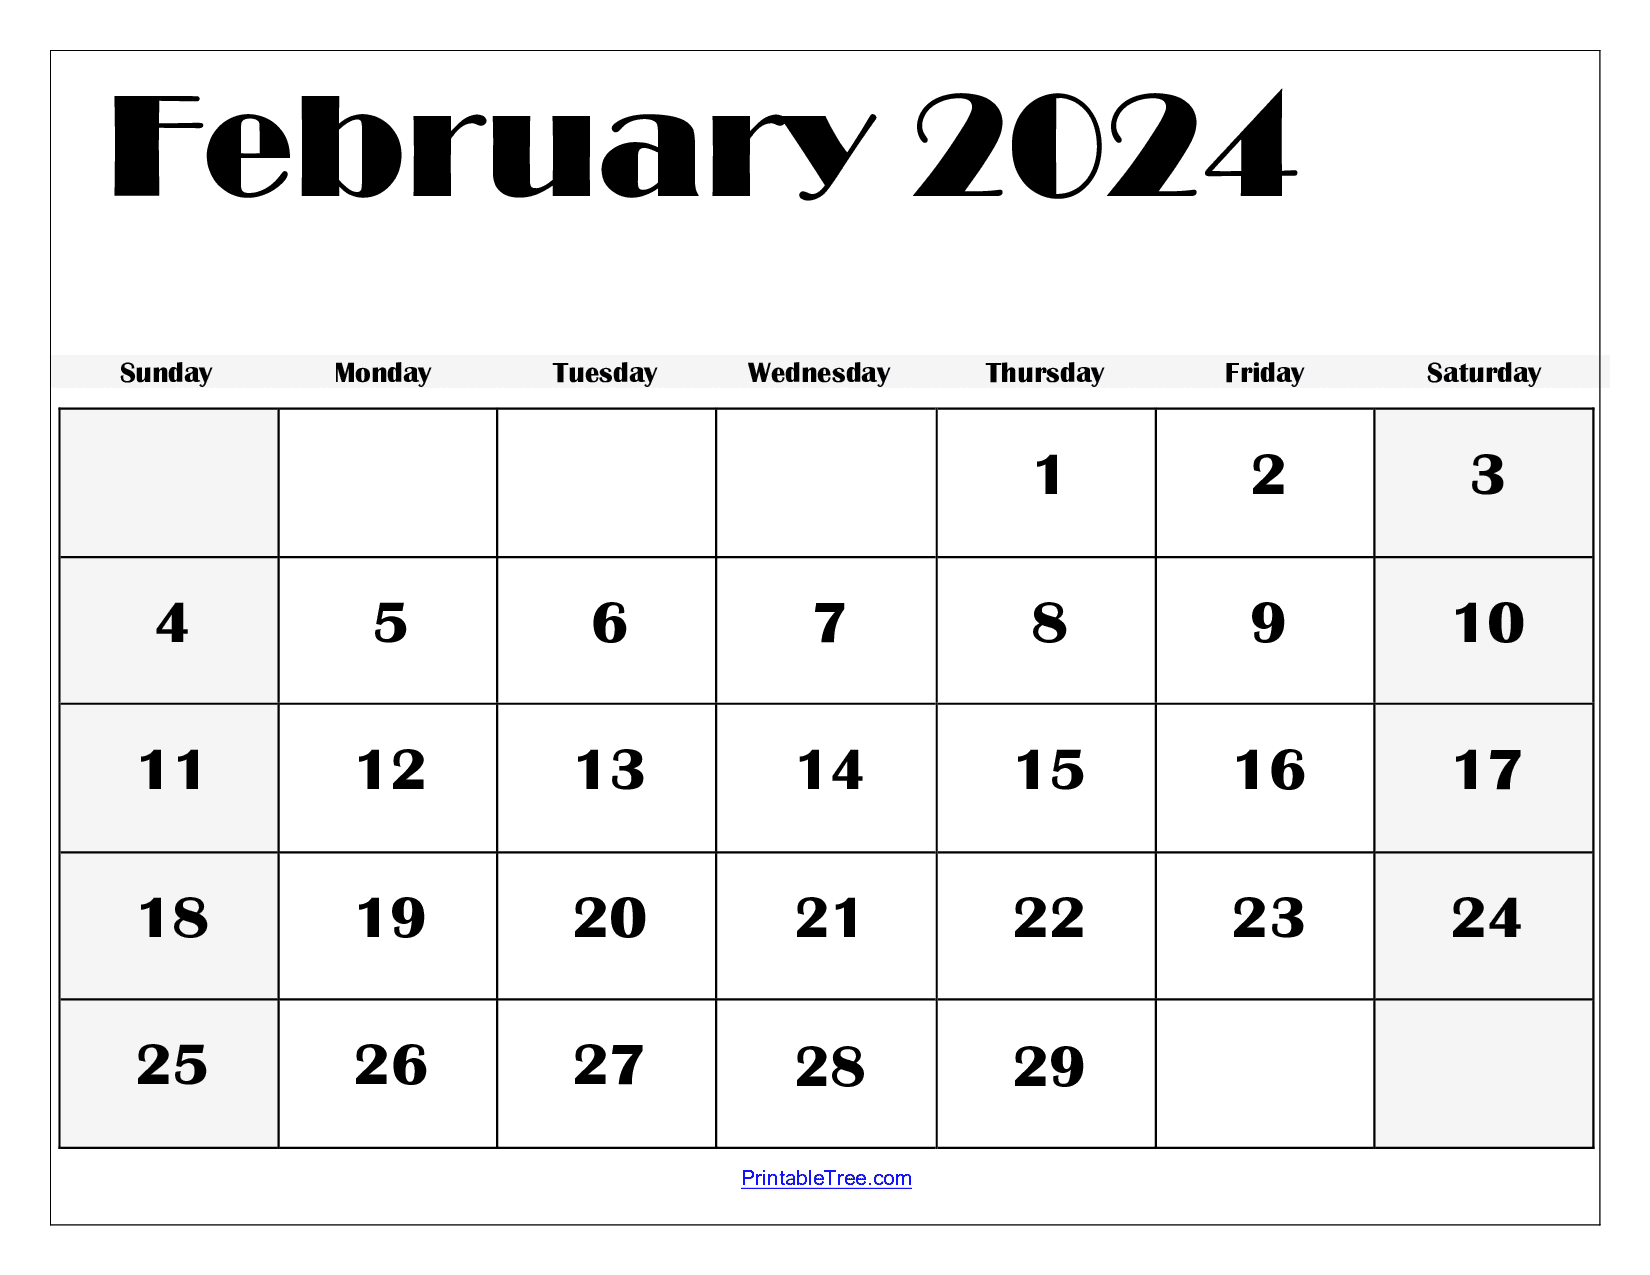 February 2024 Calendar Printable Pdf Template With Holidays for Free Printable Feb 2024 Calendar